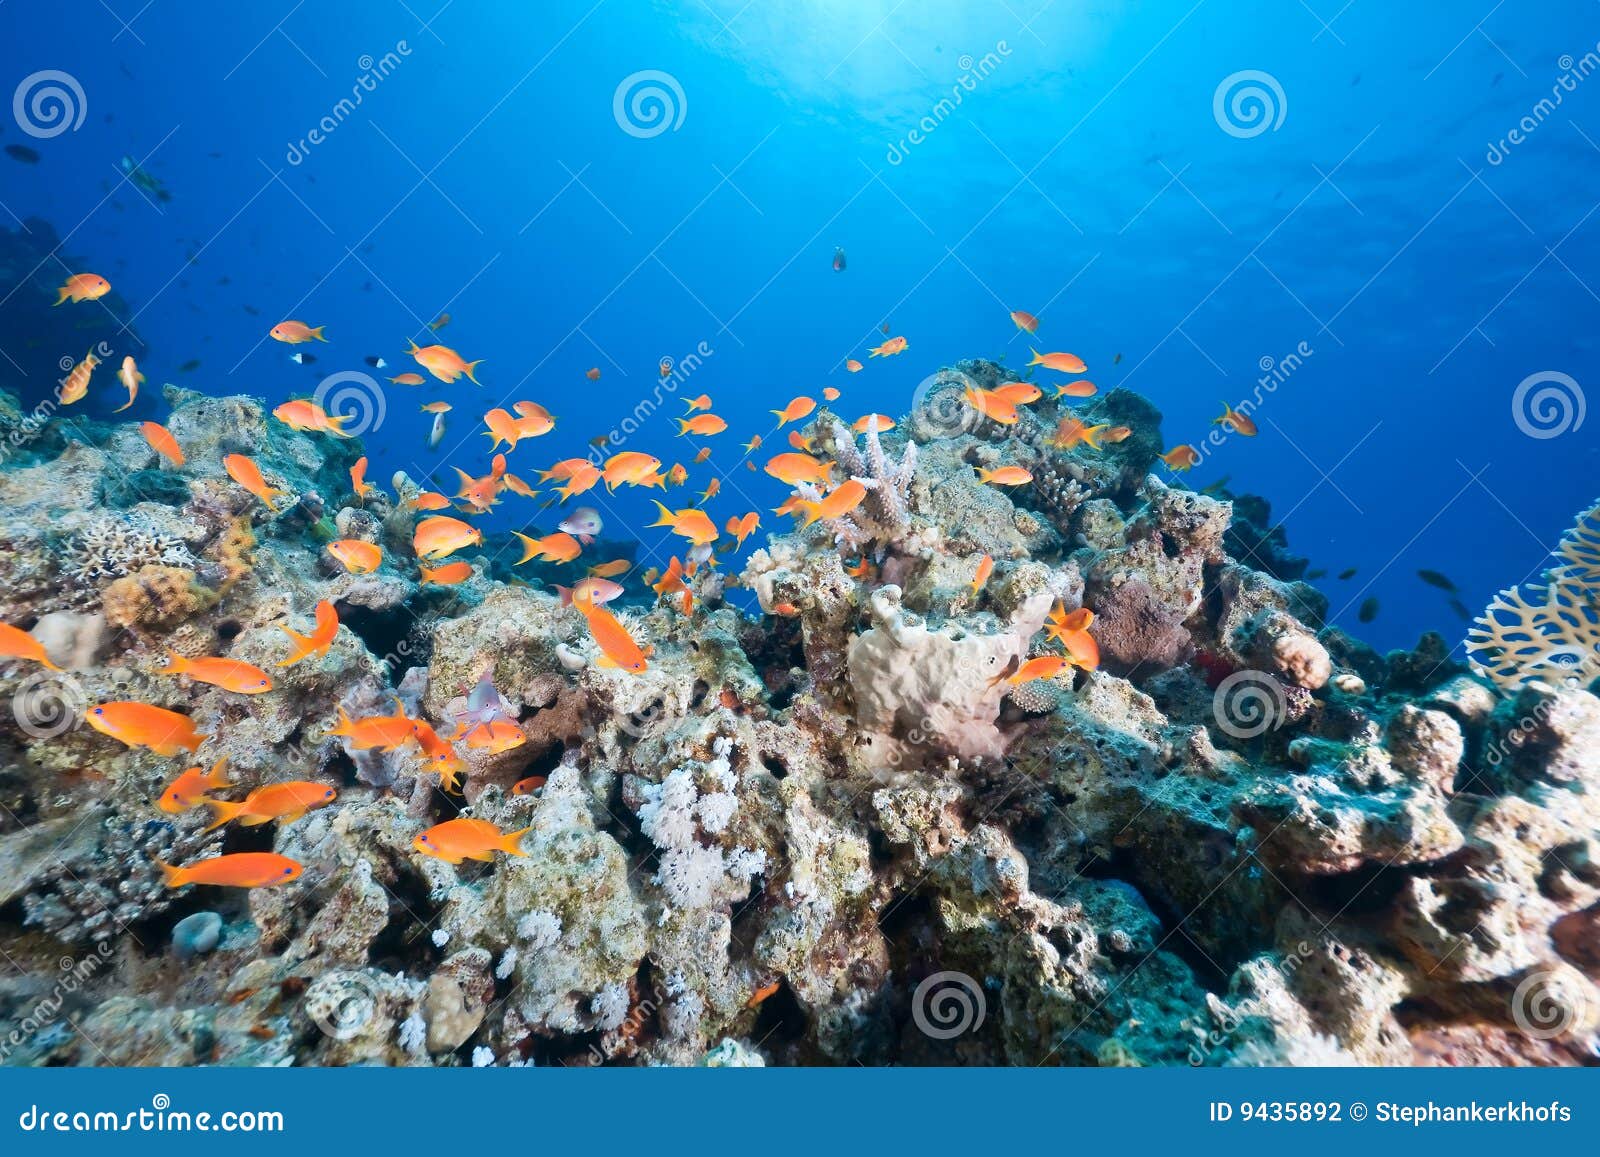 Ocean, sun and fish stock photo. Image of purity, sunlight - 9435892